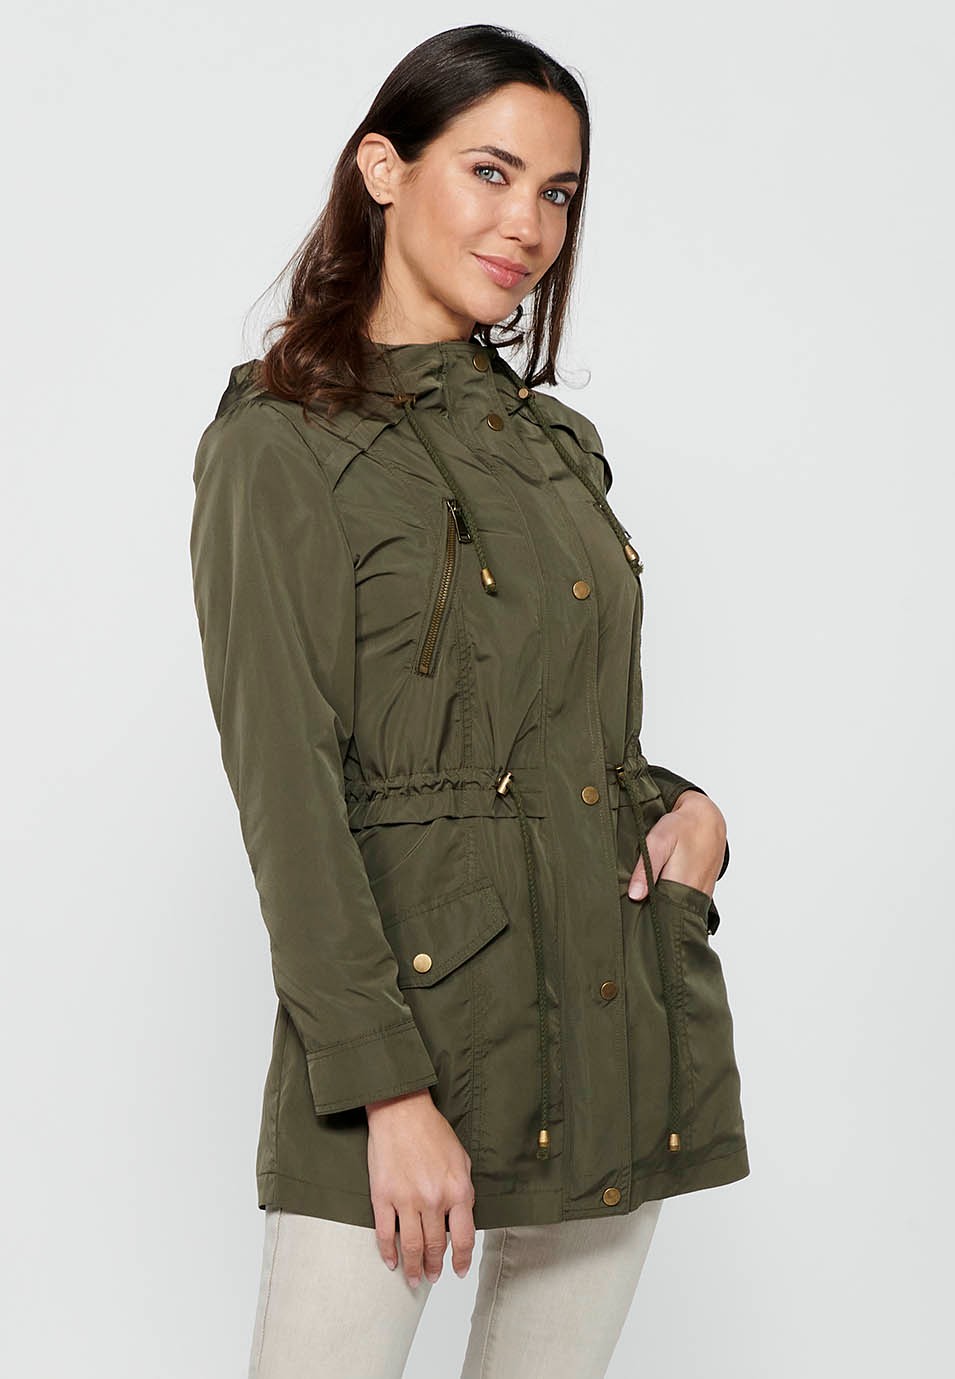 Women's Khaki Long Sleeve Zip Front Hooded Collar Parka Jacket with Pockets